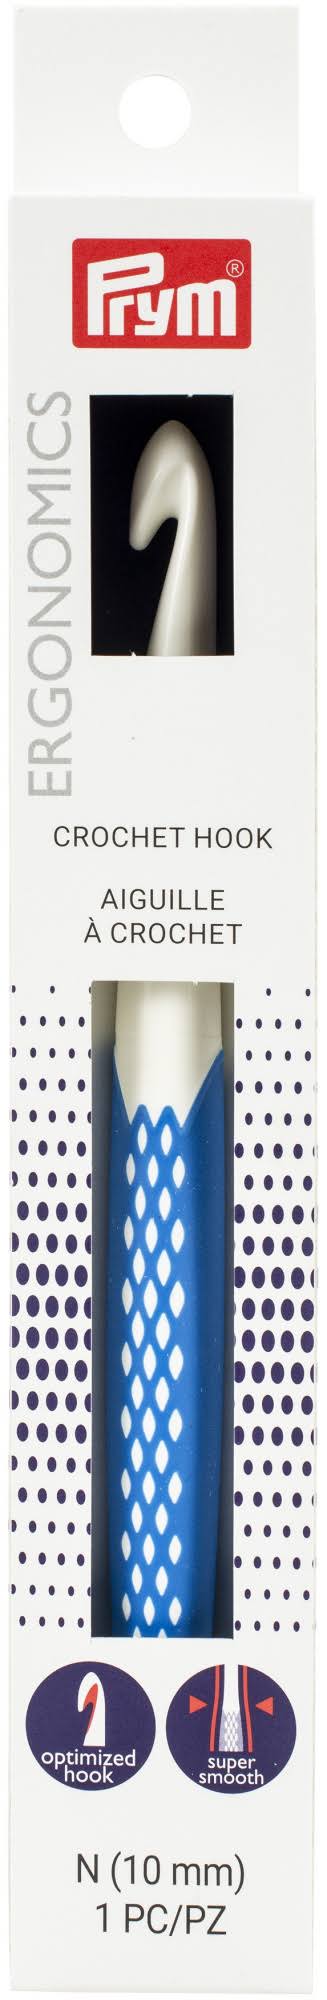 Prym Crochet Hook | Knitting & Crochet